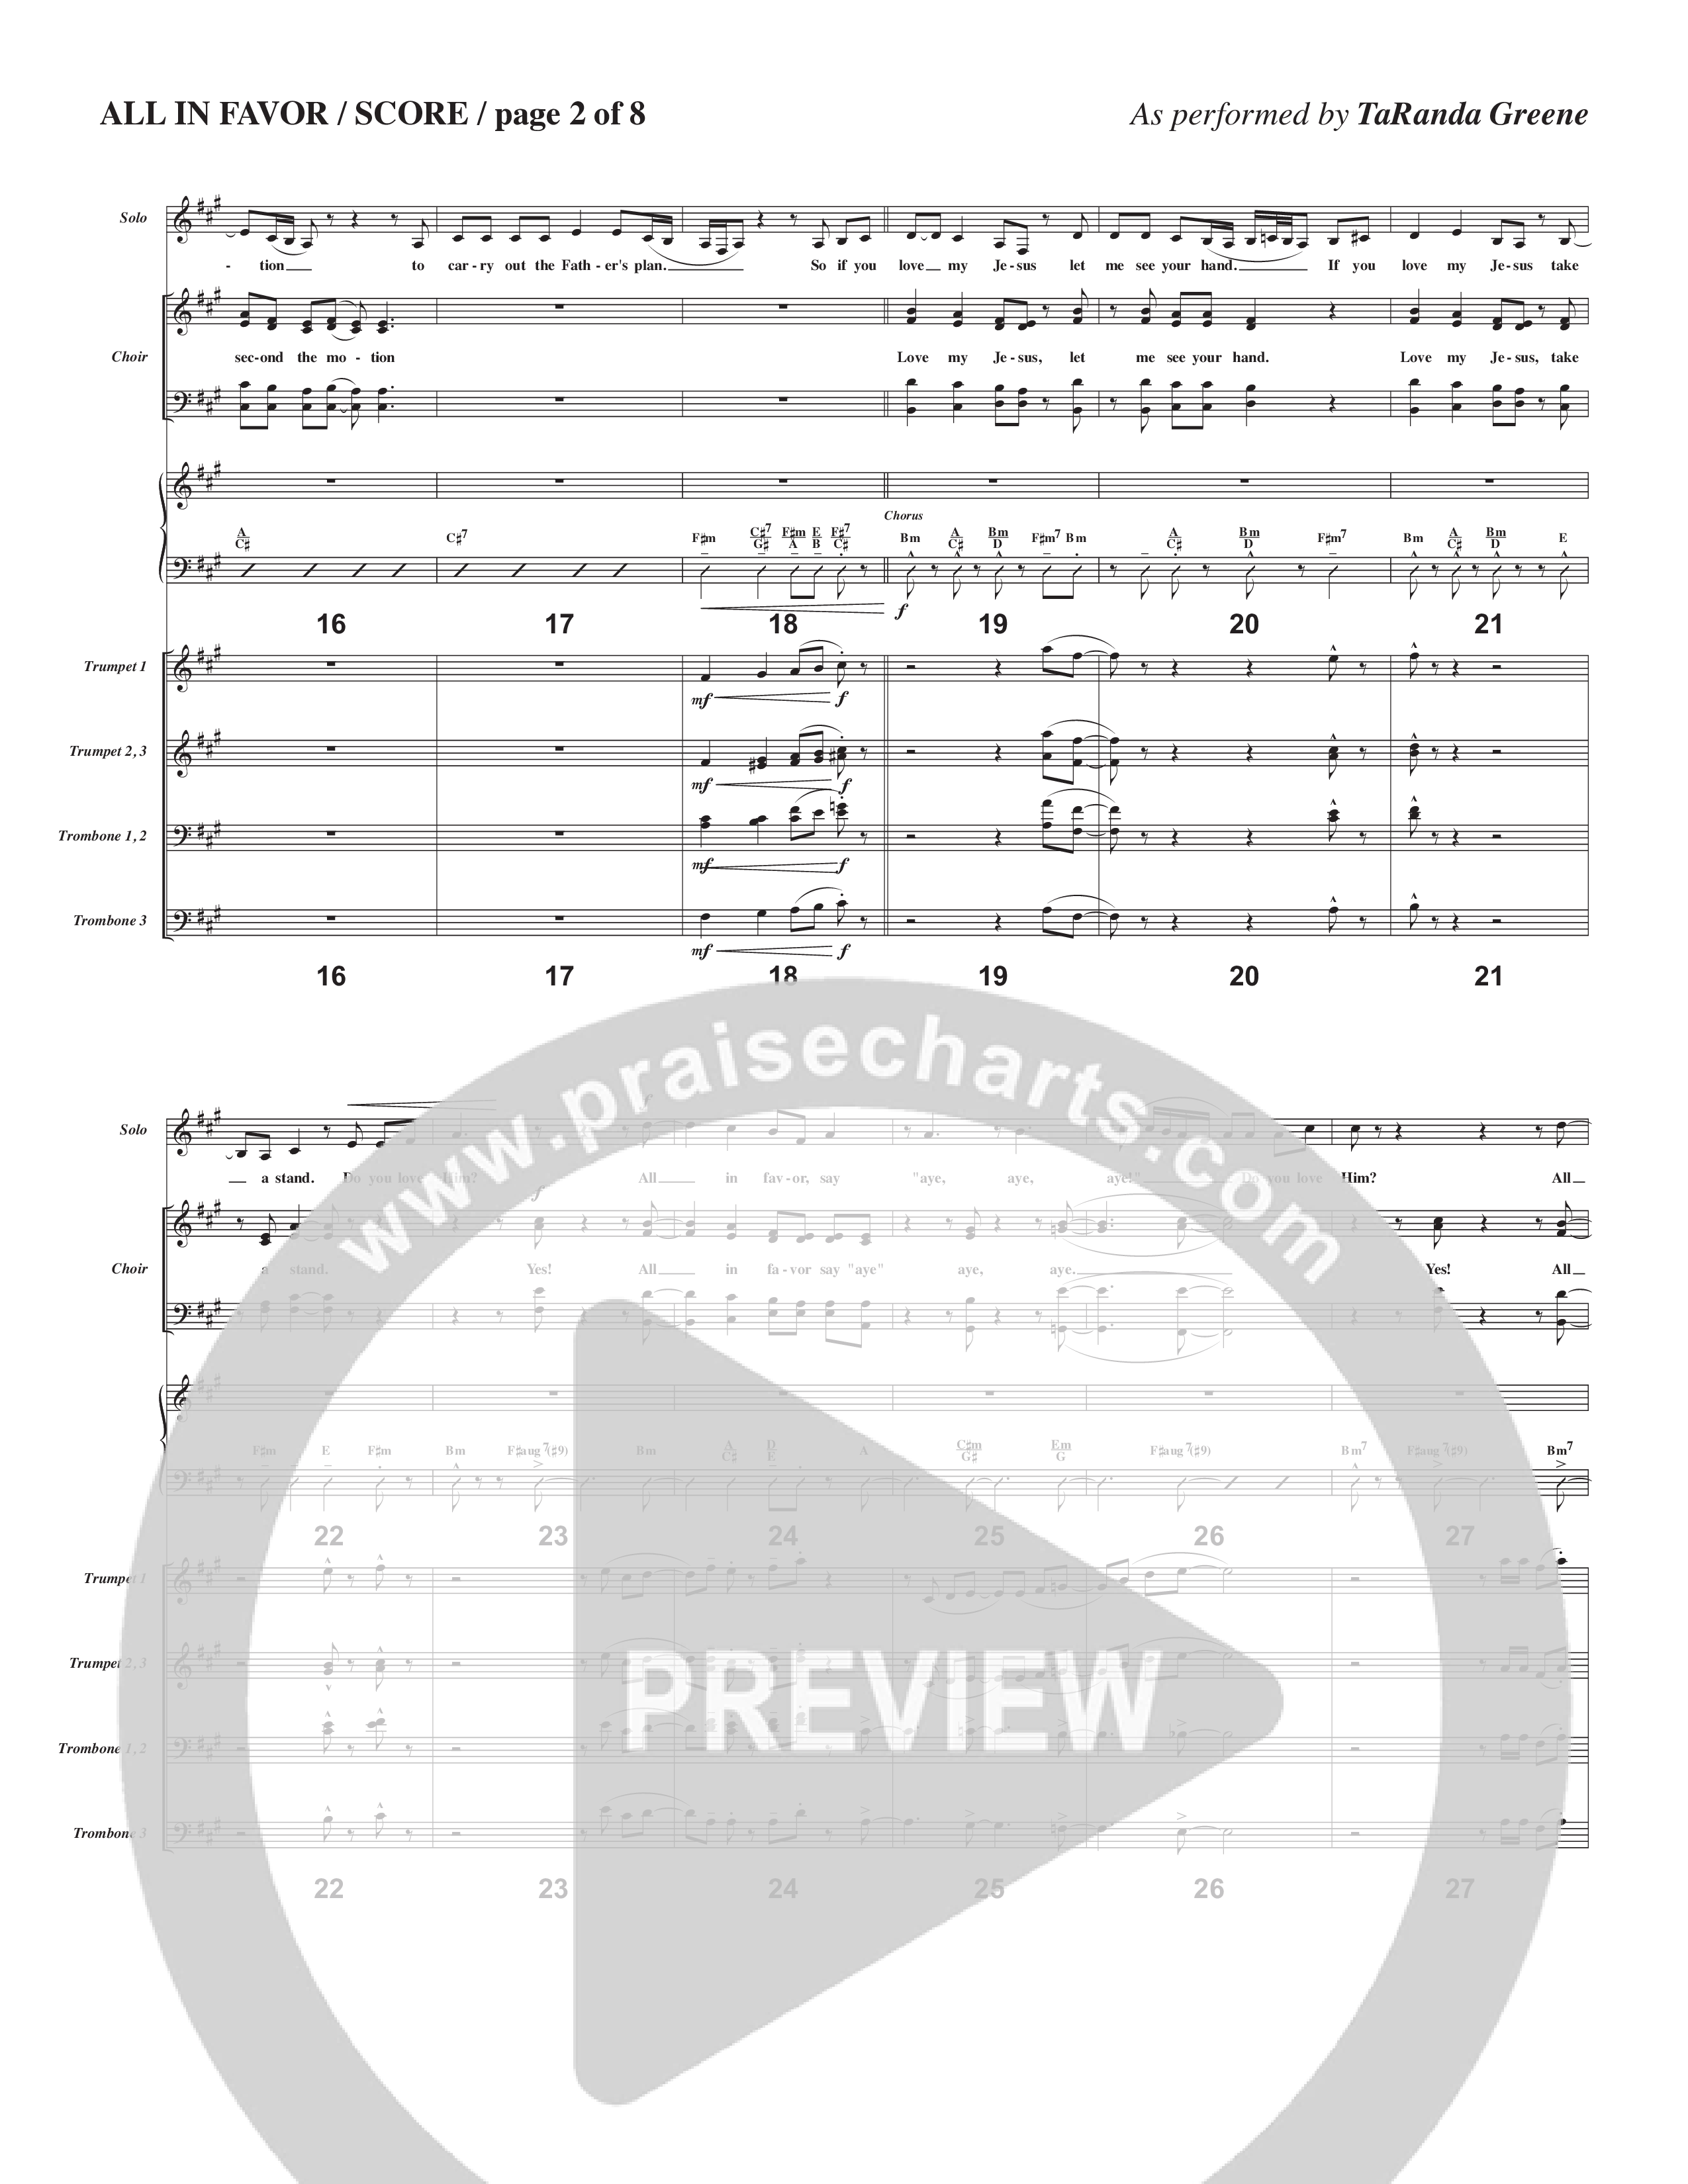 All In Favor (Choral Anthem SATB) Orchestration (TaRanda Greene / Arr. Wayne Haun / Arr. Kris Crunk)